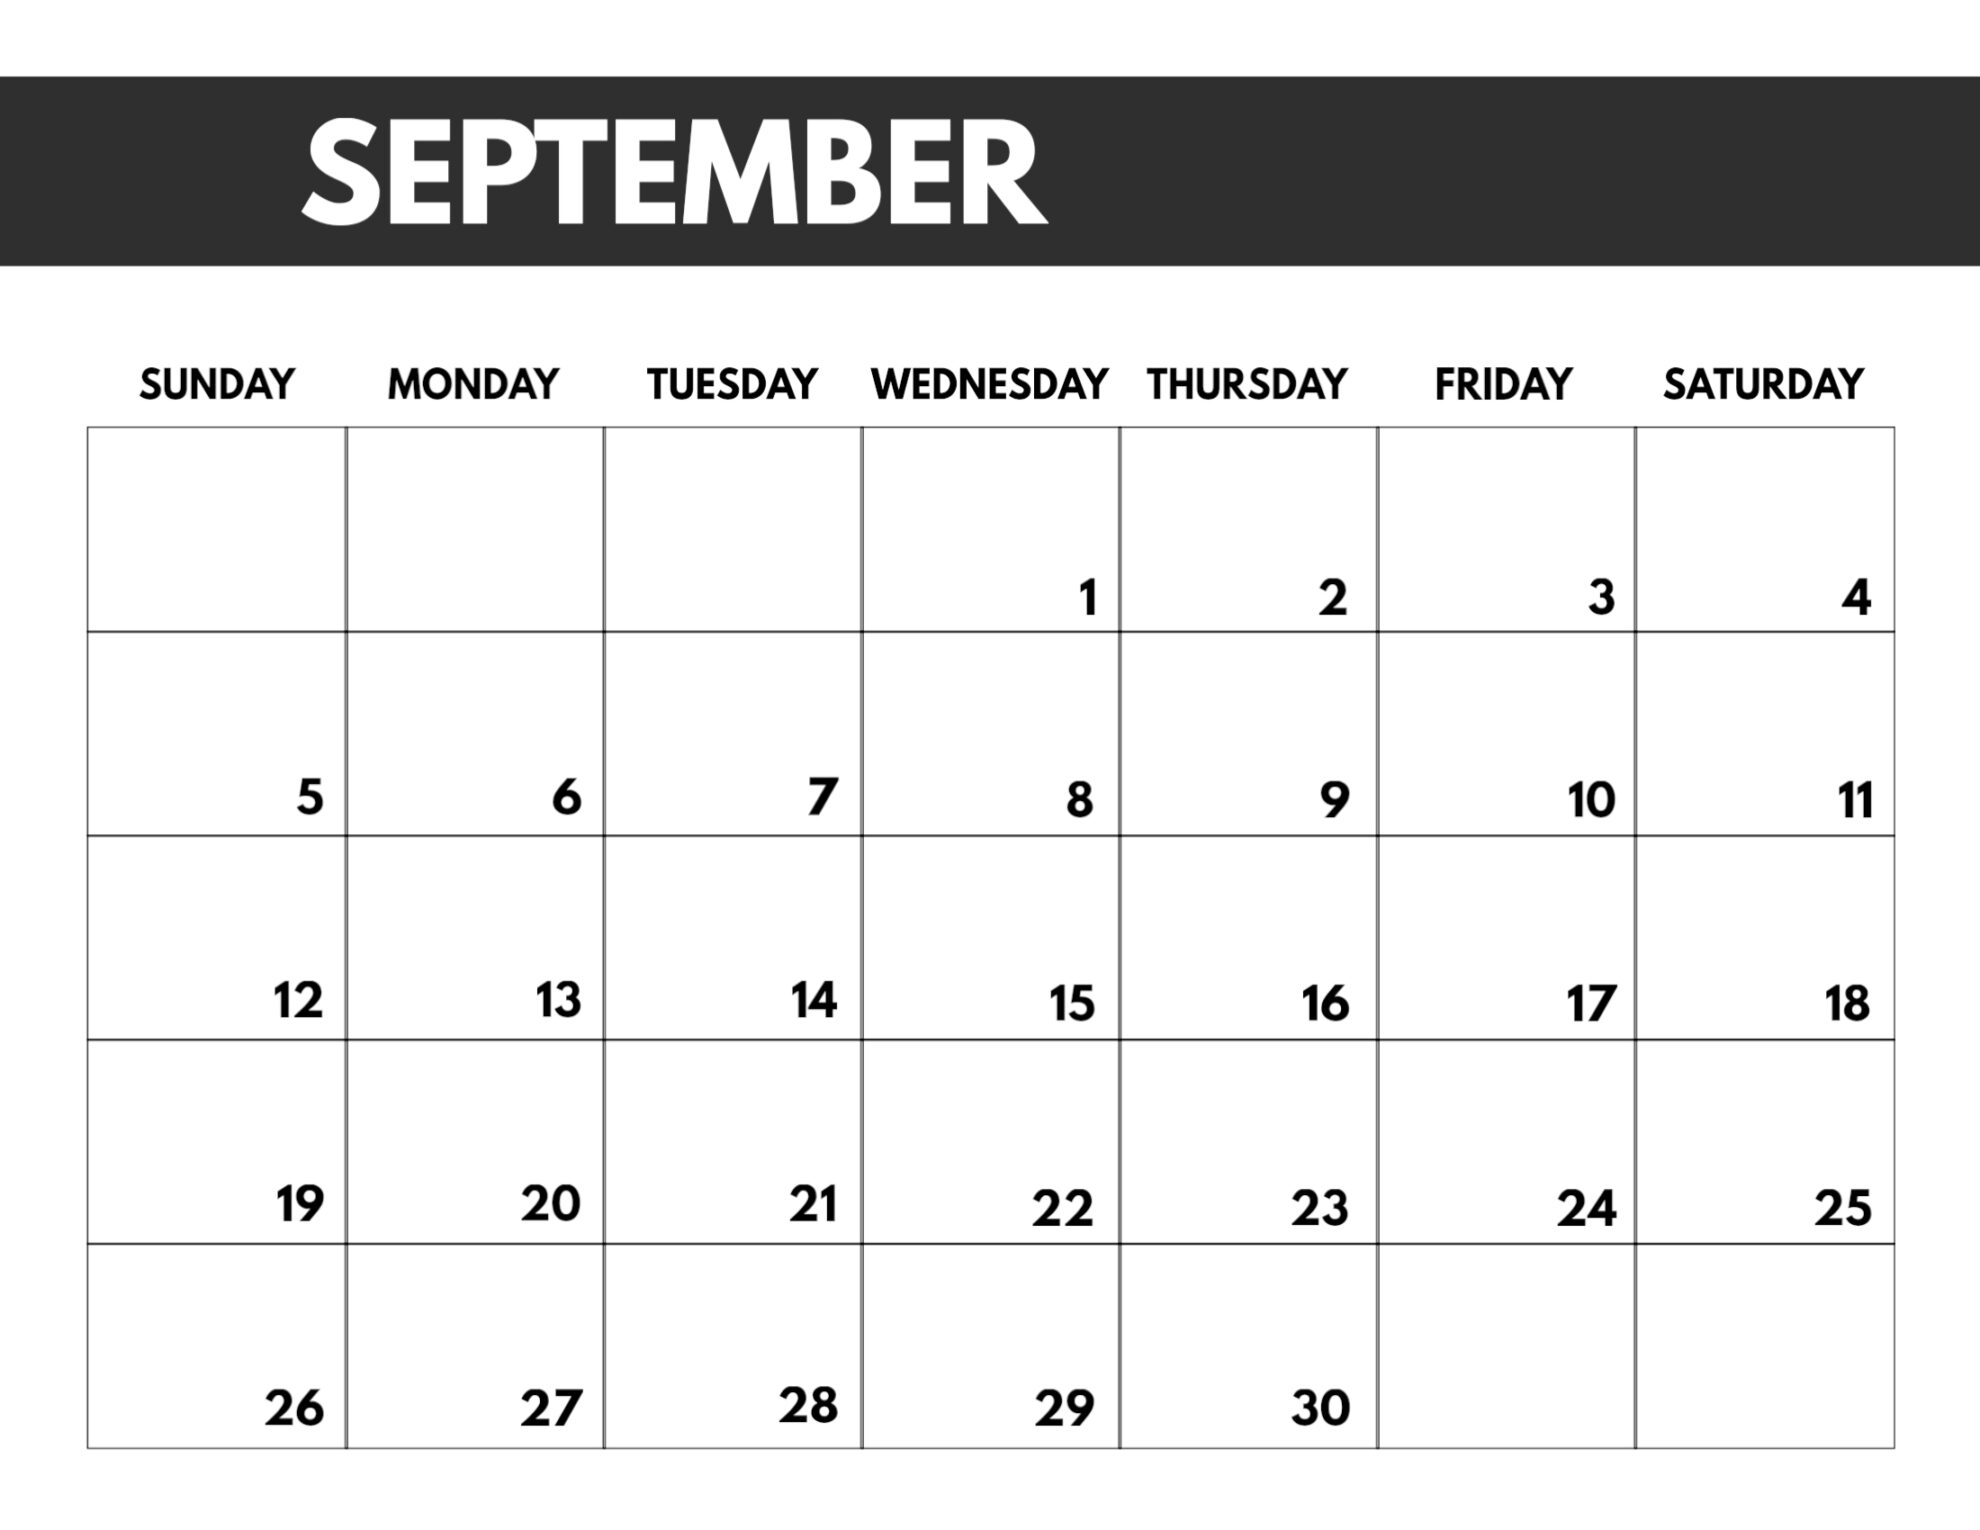 View Printable Calendar 2021 Free September Images